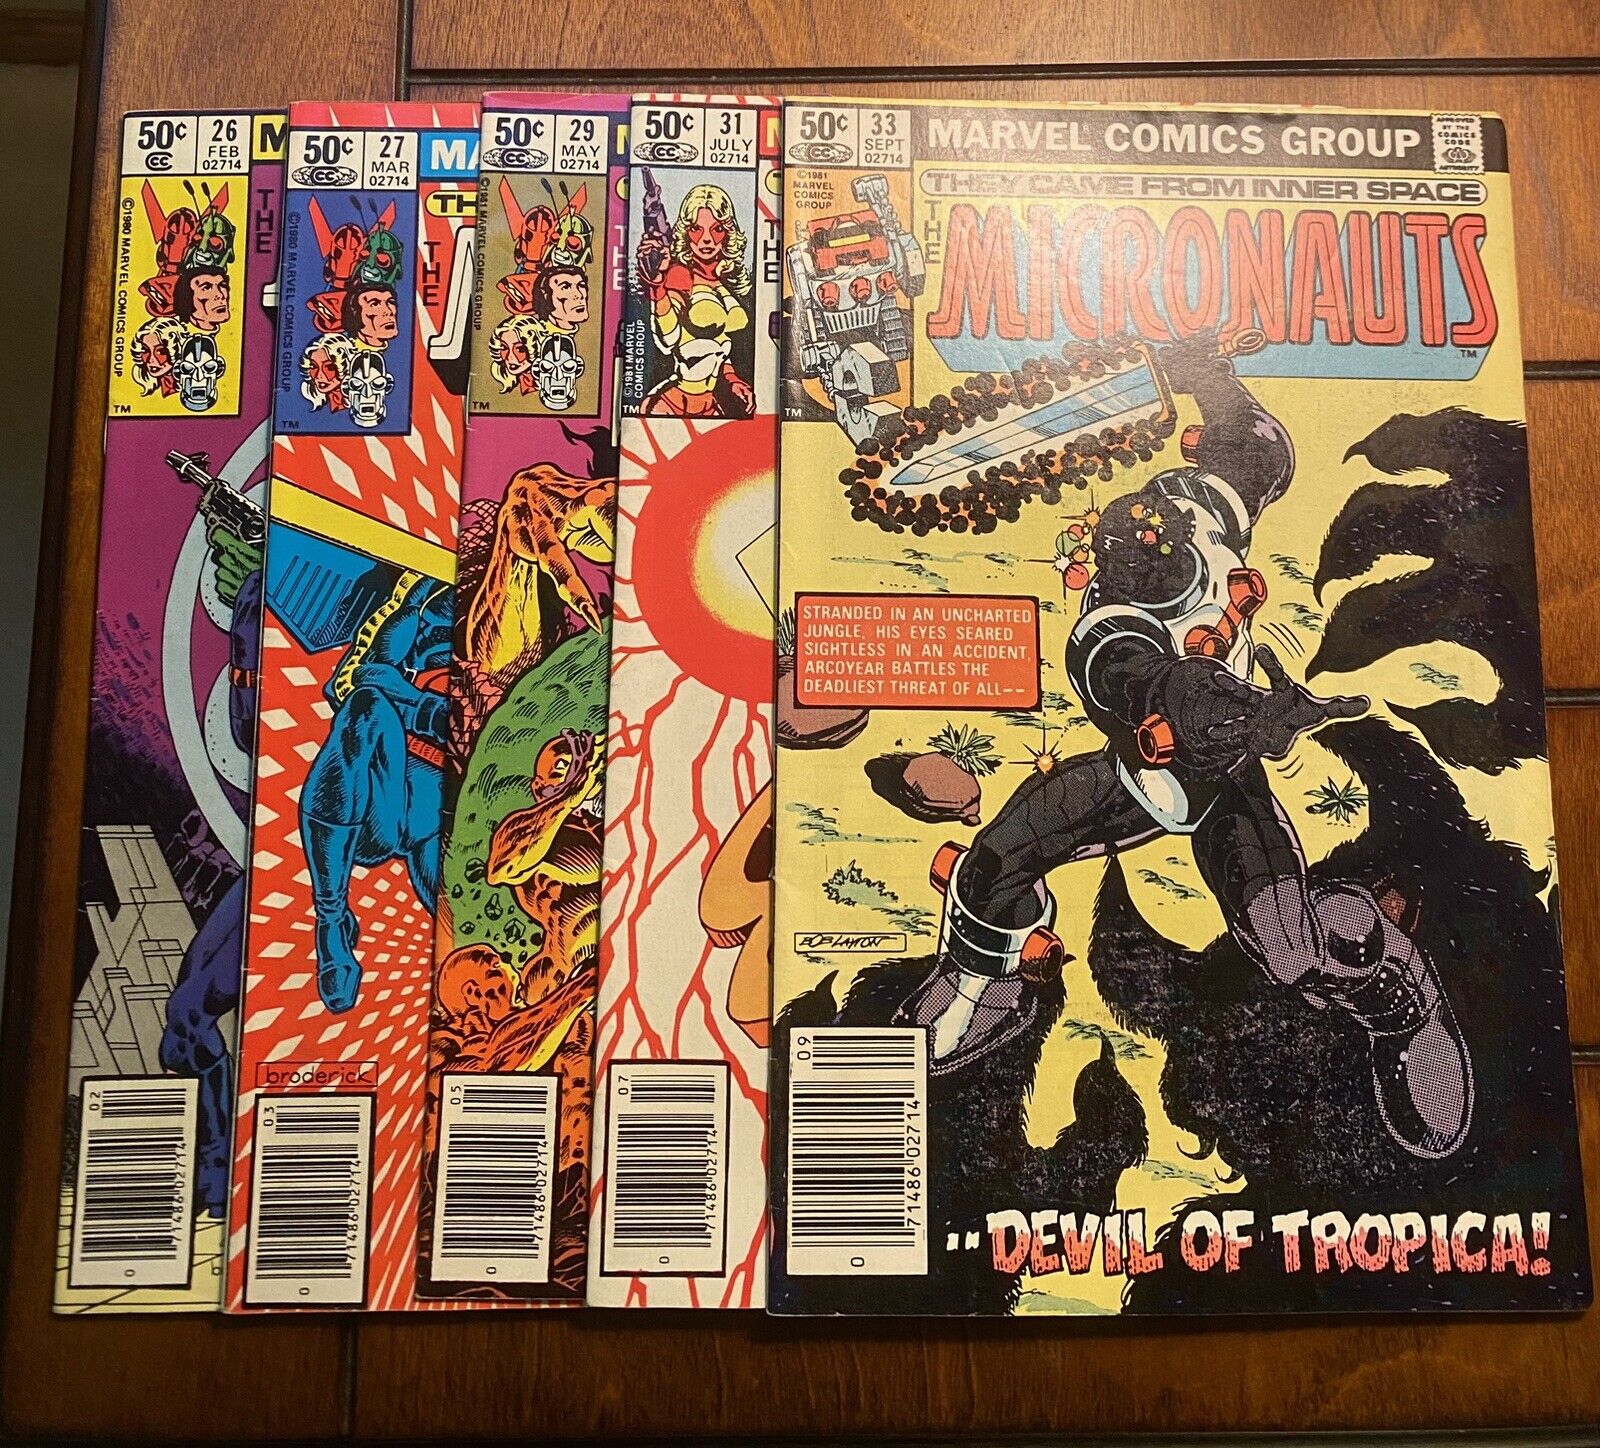 Lot of 5 Micronuats Comics (1981) - #26, #27, #29, #31, #33 - Gemini Mailer